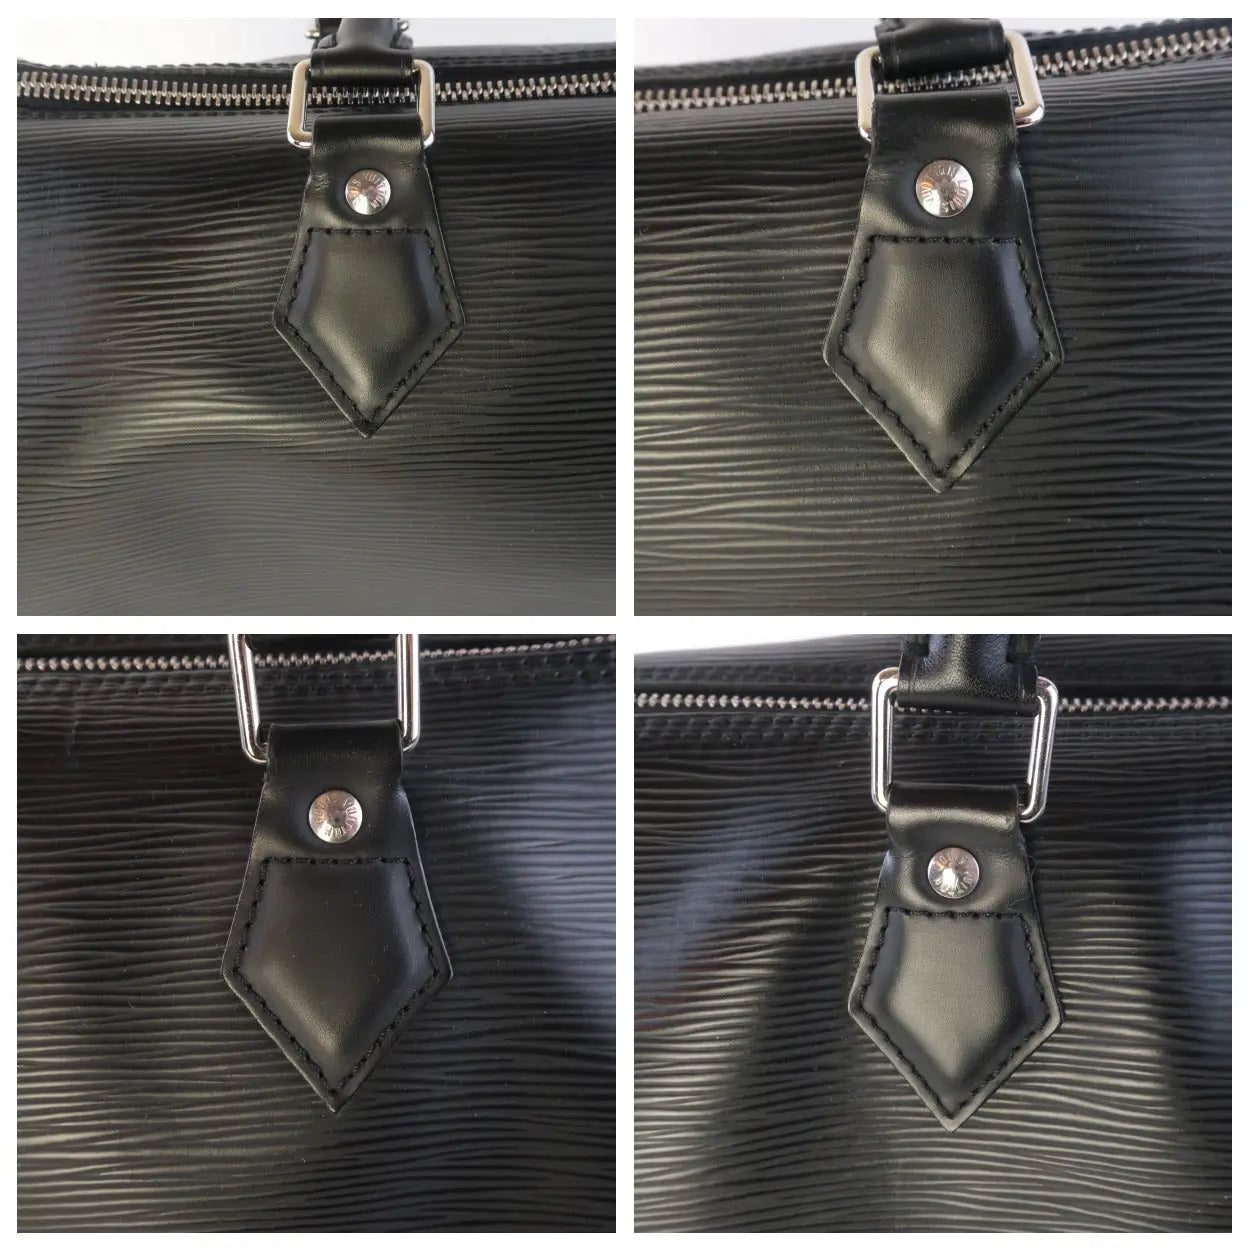 3ac2805] Auth Louis Vuitton Handbag Epi Speedy 35 M42992 Noir